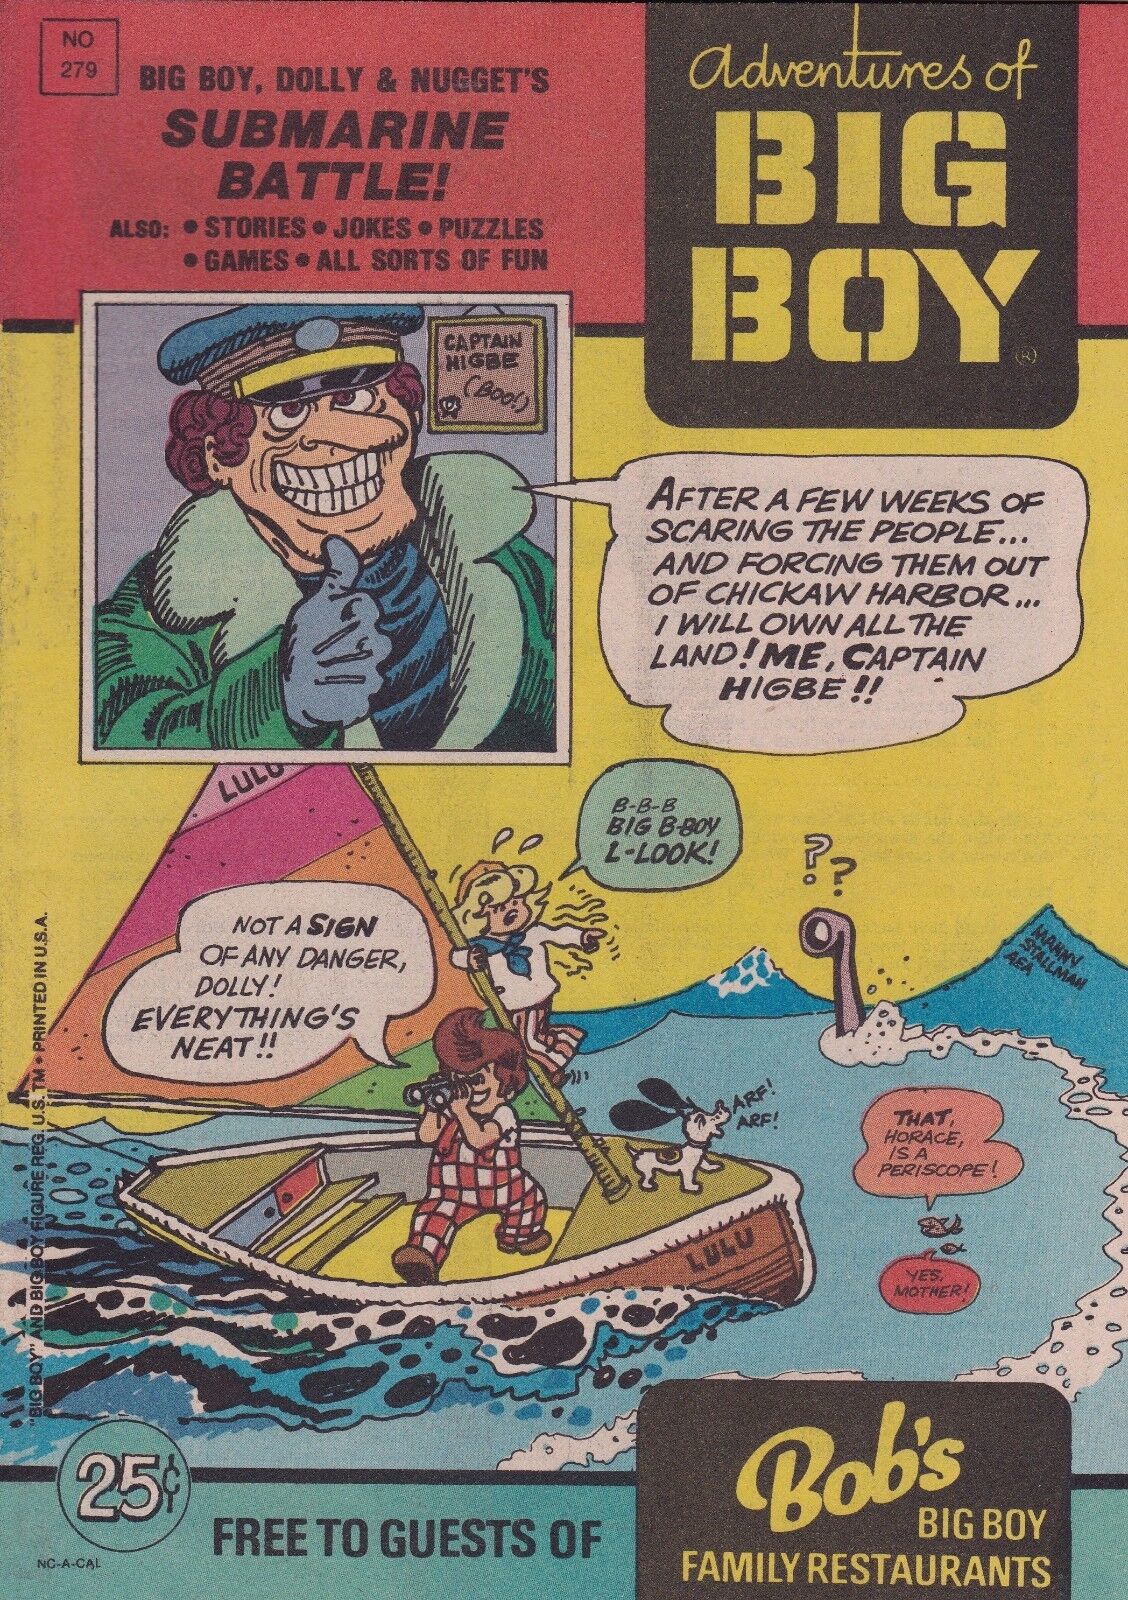 ADVENTURE OF BIG BOY PROMO COMIC BOOK #279 1980 BOB\'S BIG BOY FAMILY RESTAURANT*